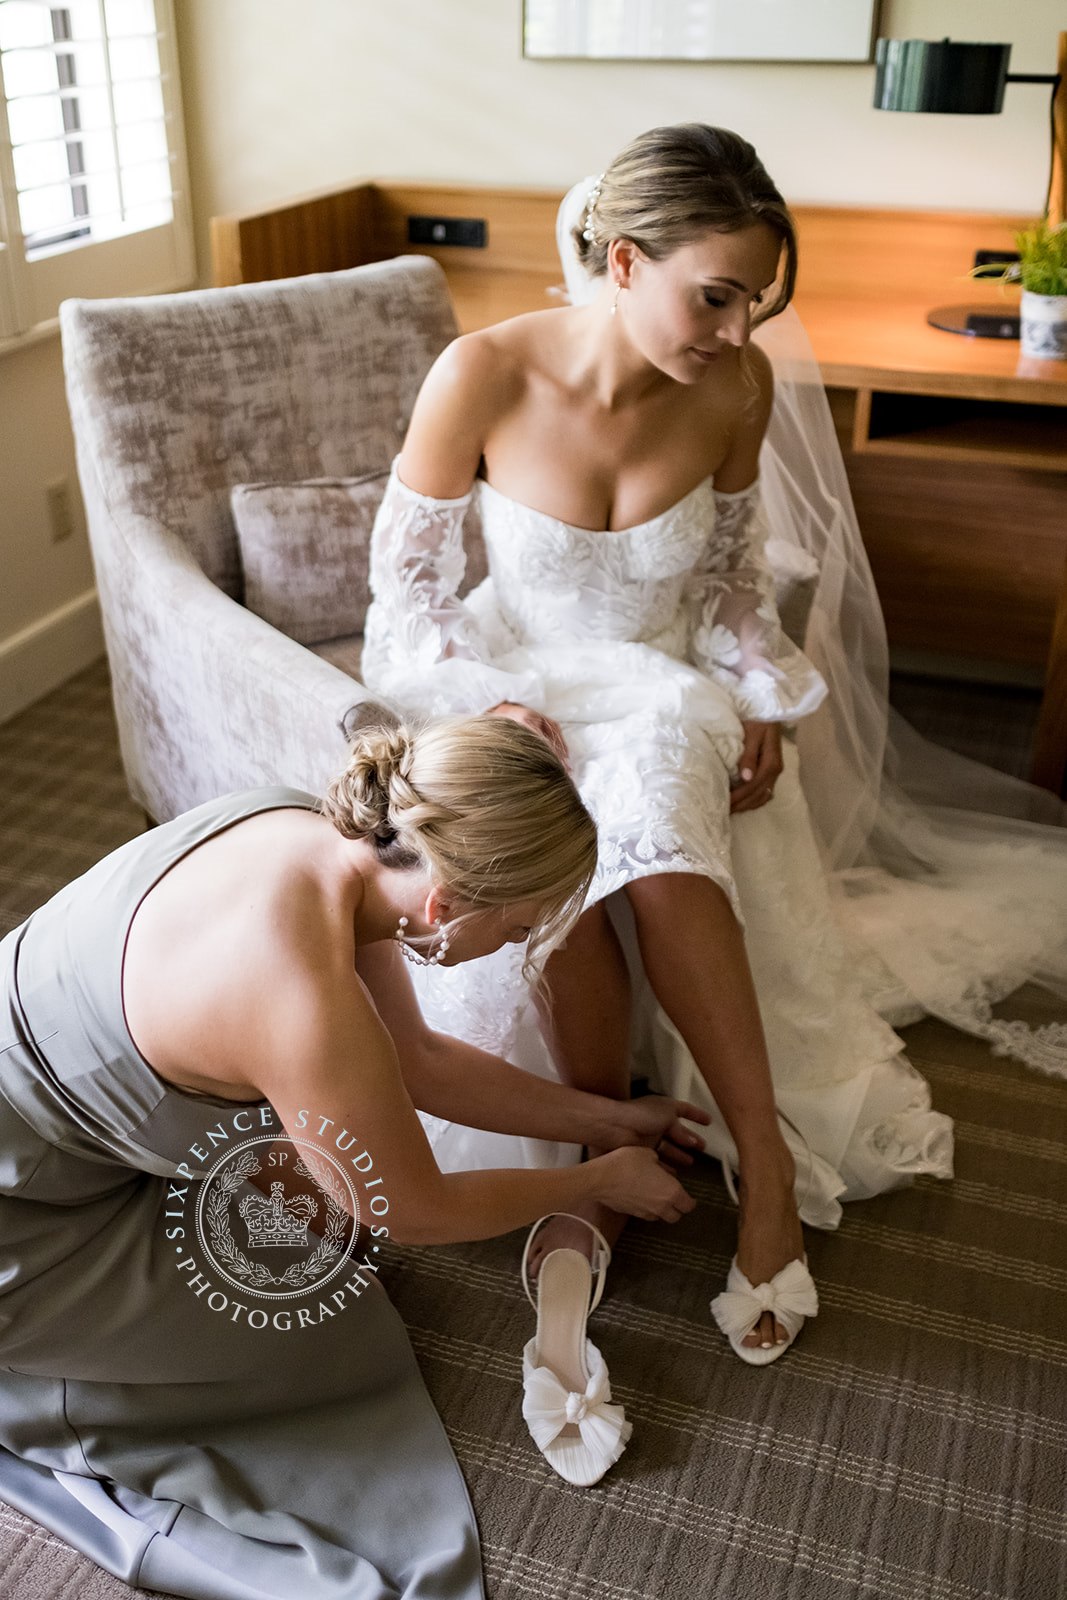 Adventurous Hearts Unite: Breathtaking Vermont Wedding Extravaganza | Elizabeth Anne Designs